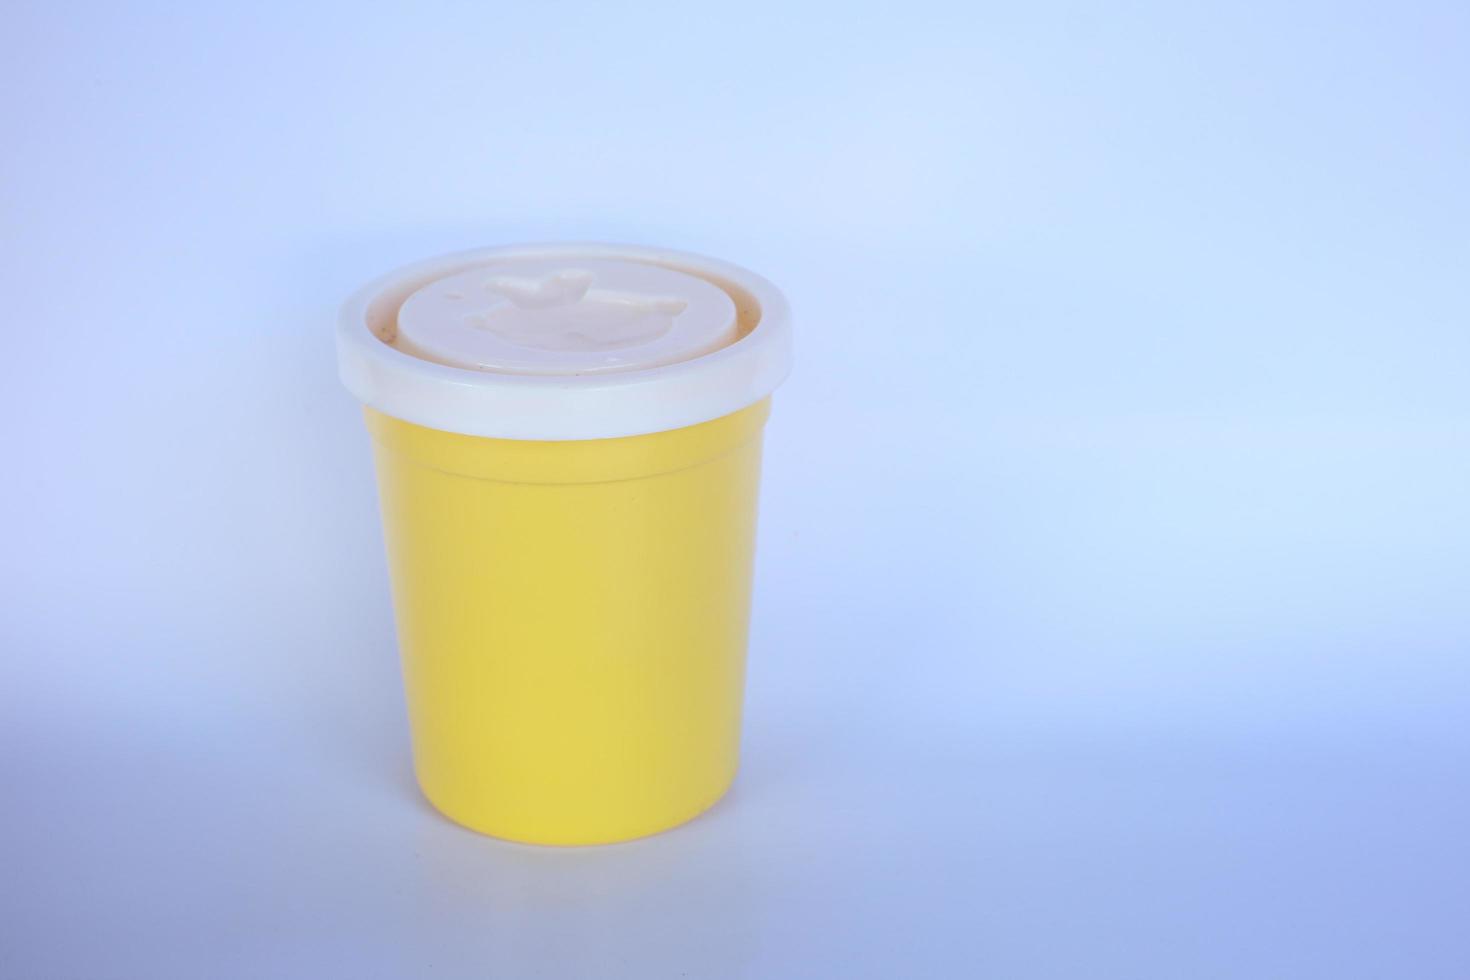 small yellow bottle on a plain white background photo